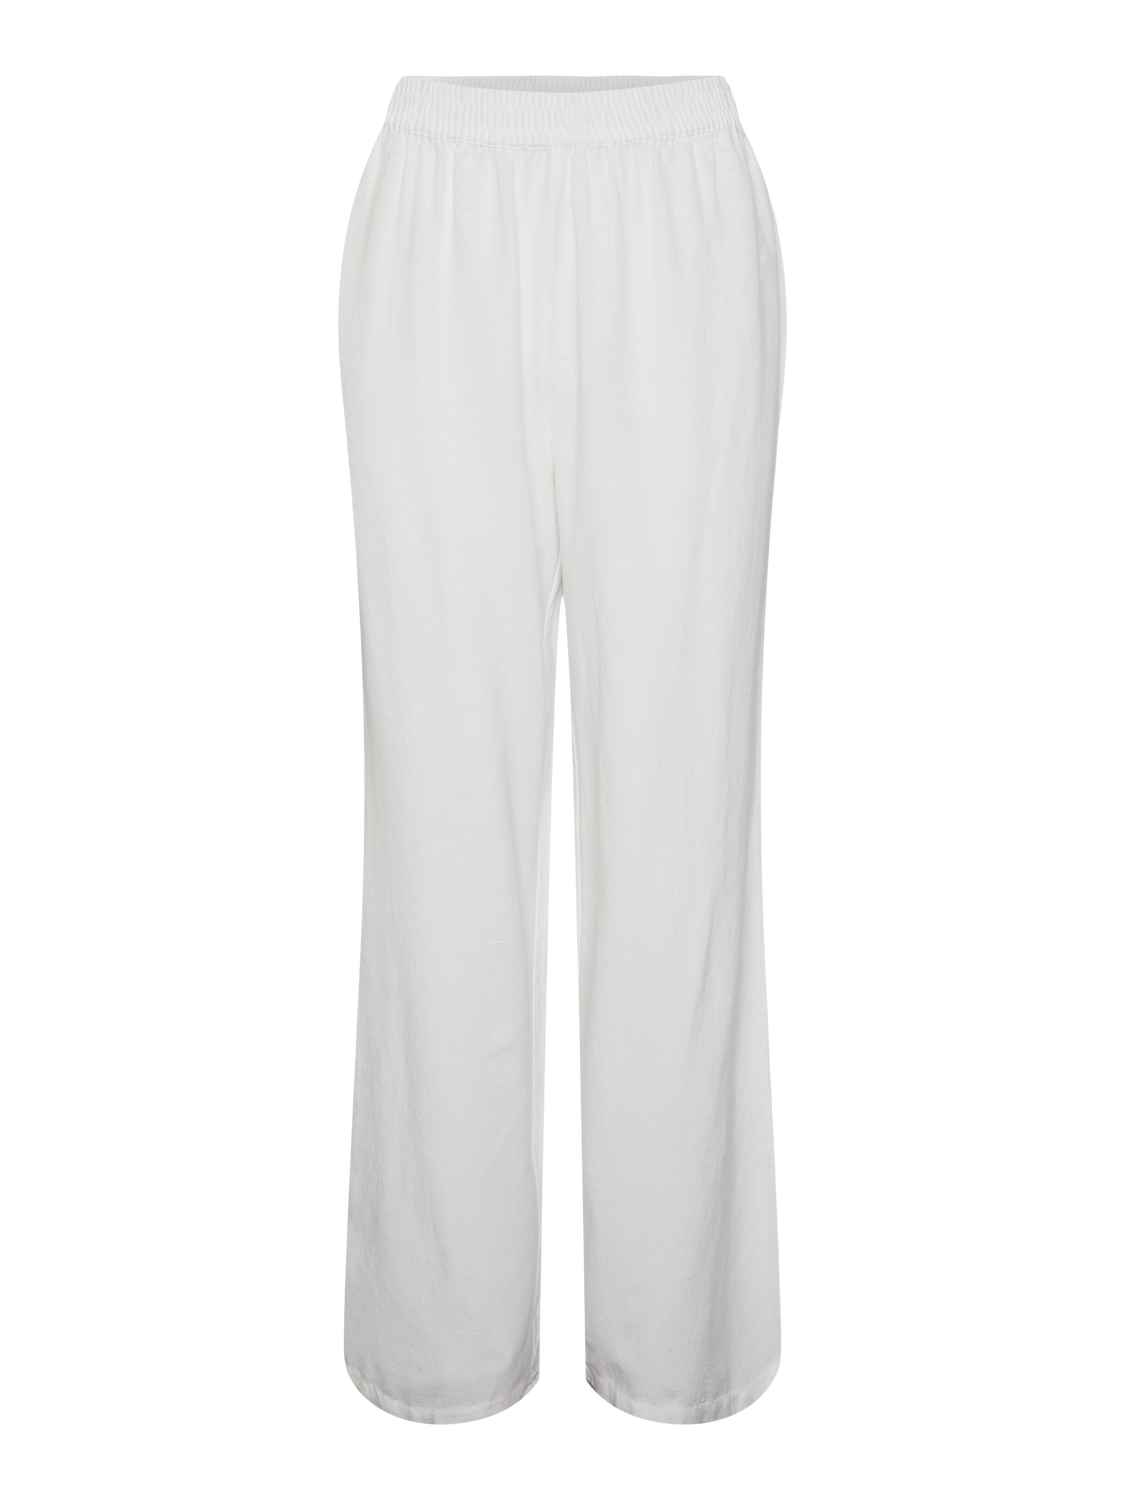 PCMILANO Pants - Bright White